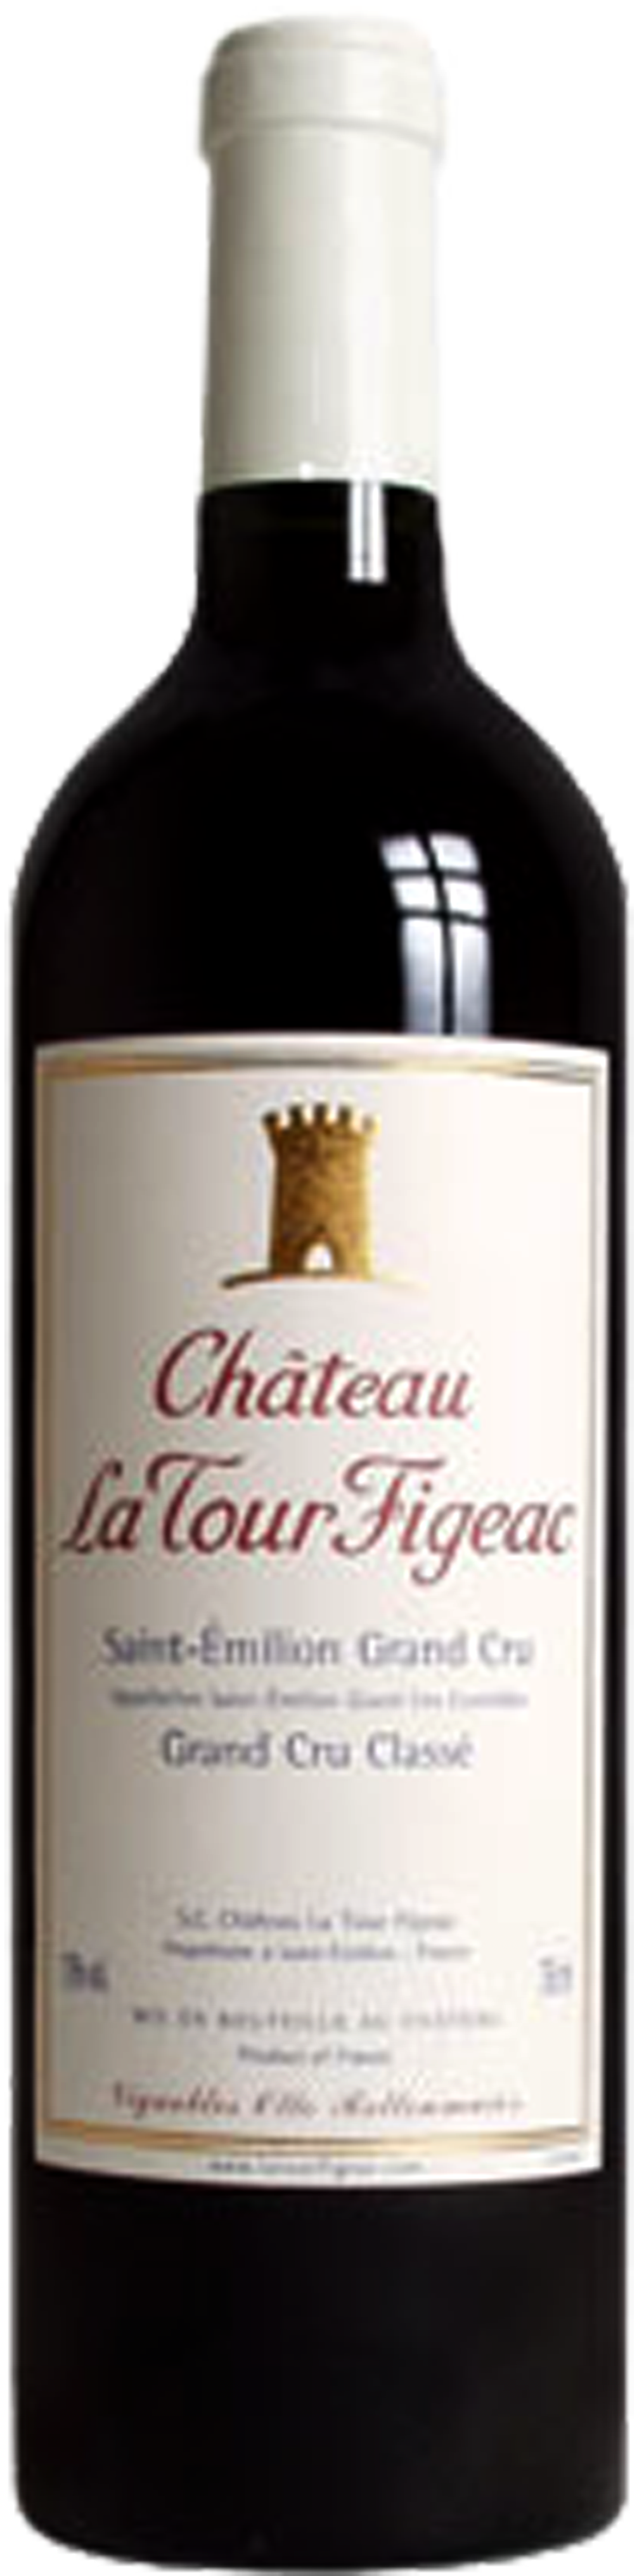 Bottle shot of 2009 Château La Tour Figeac, St Emilion Grand Cru